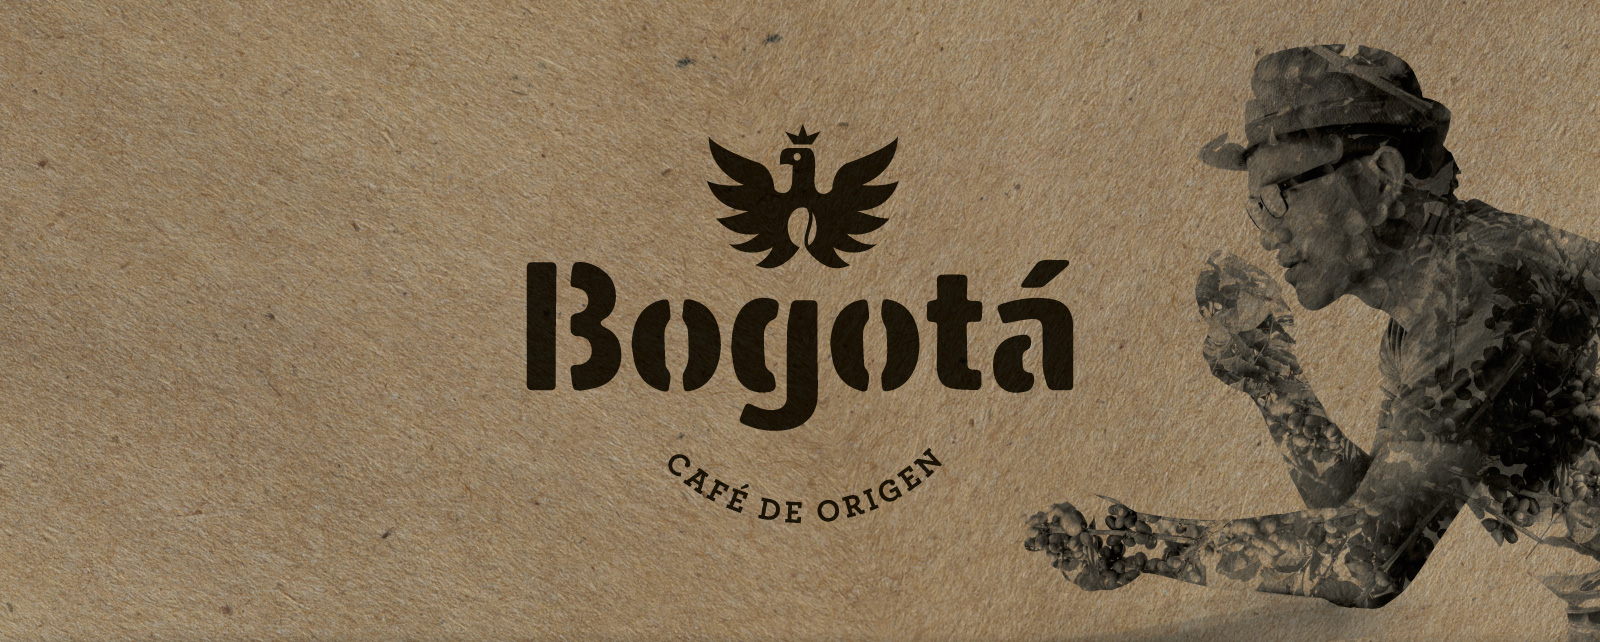 Café Bogotá